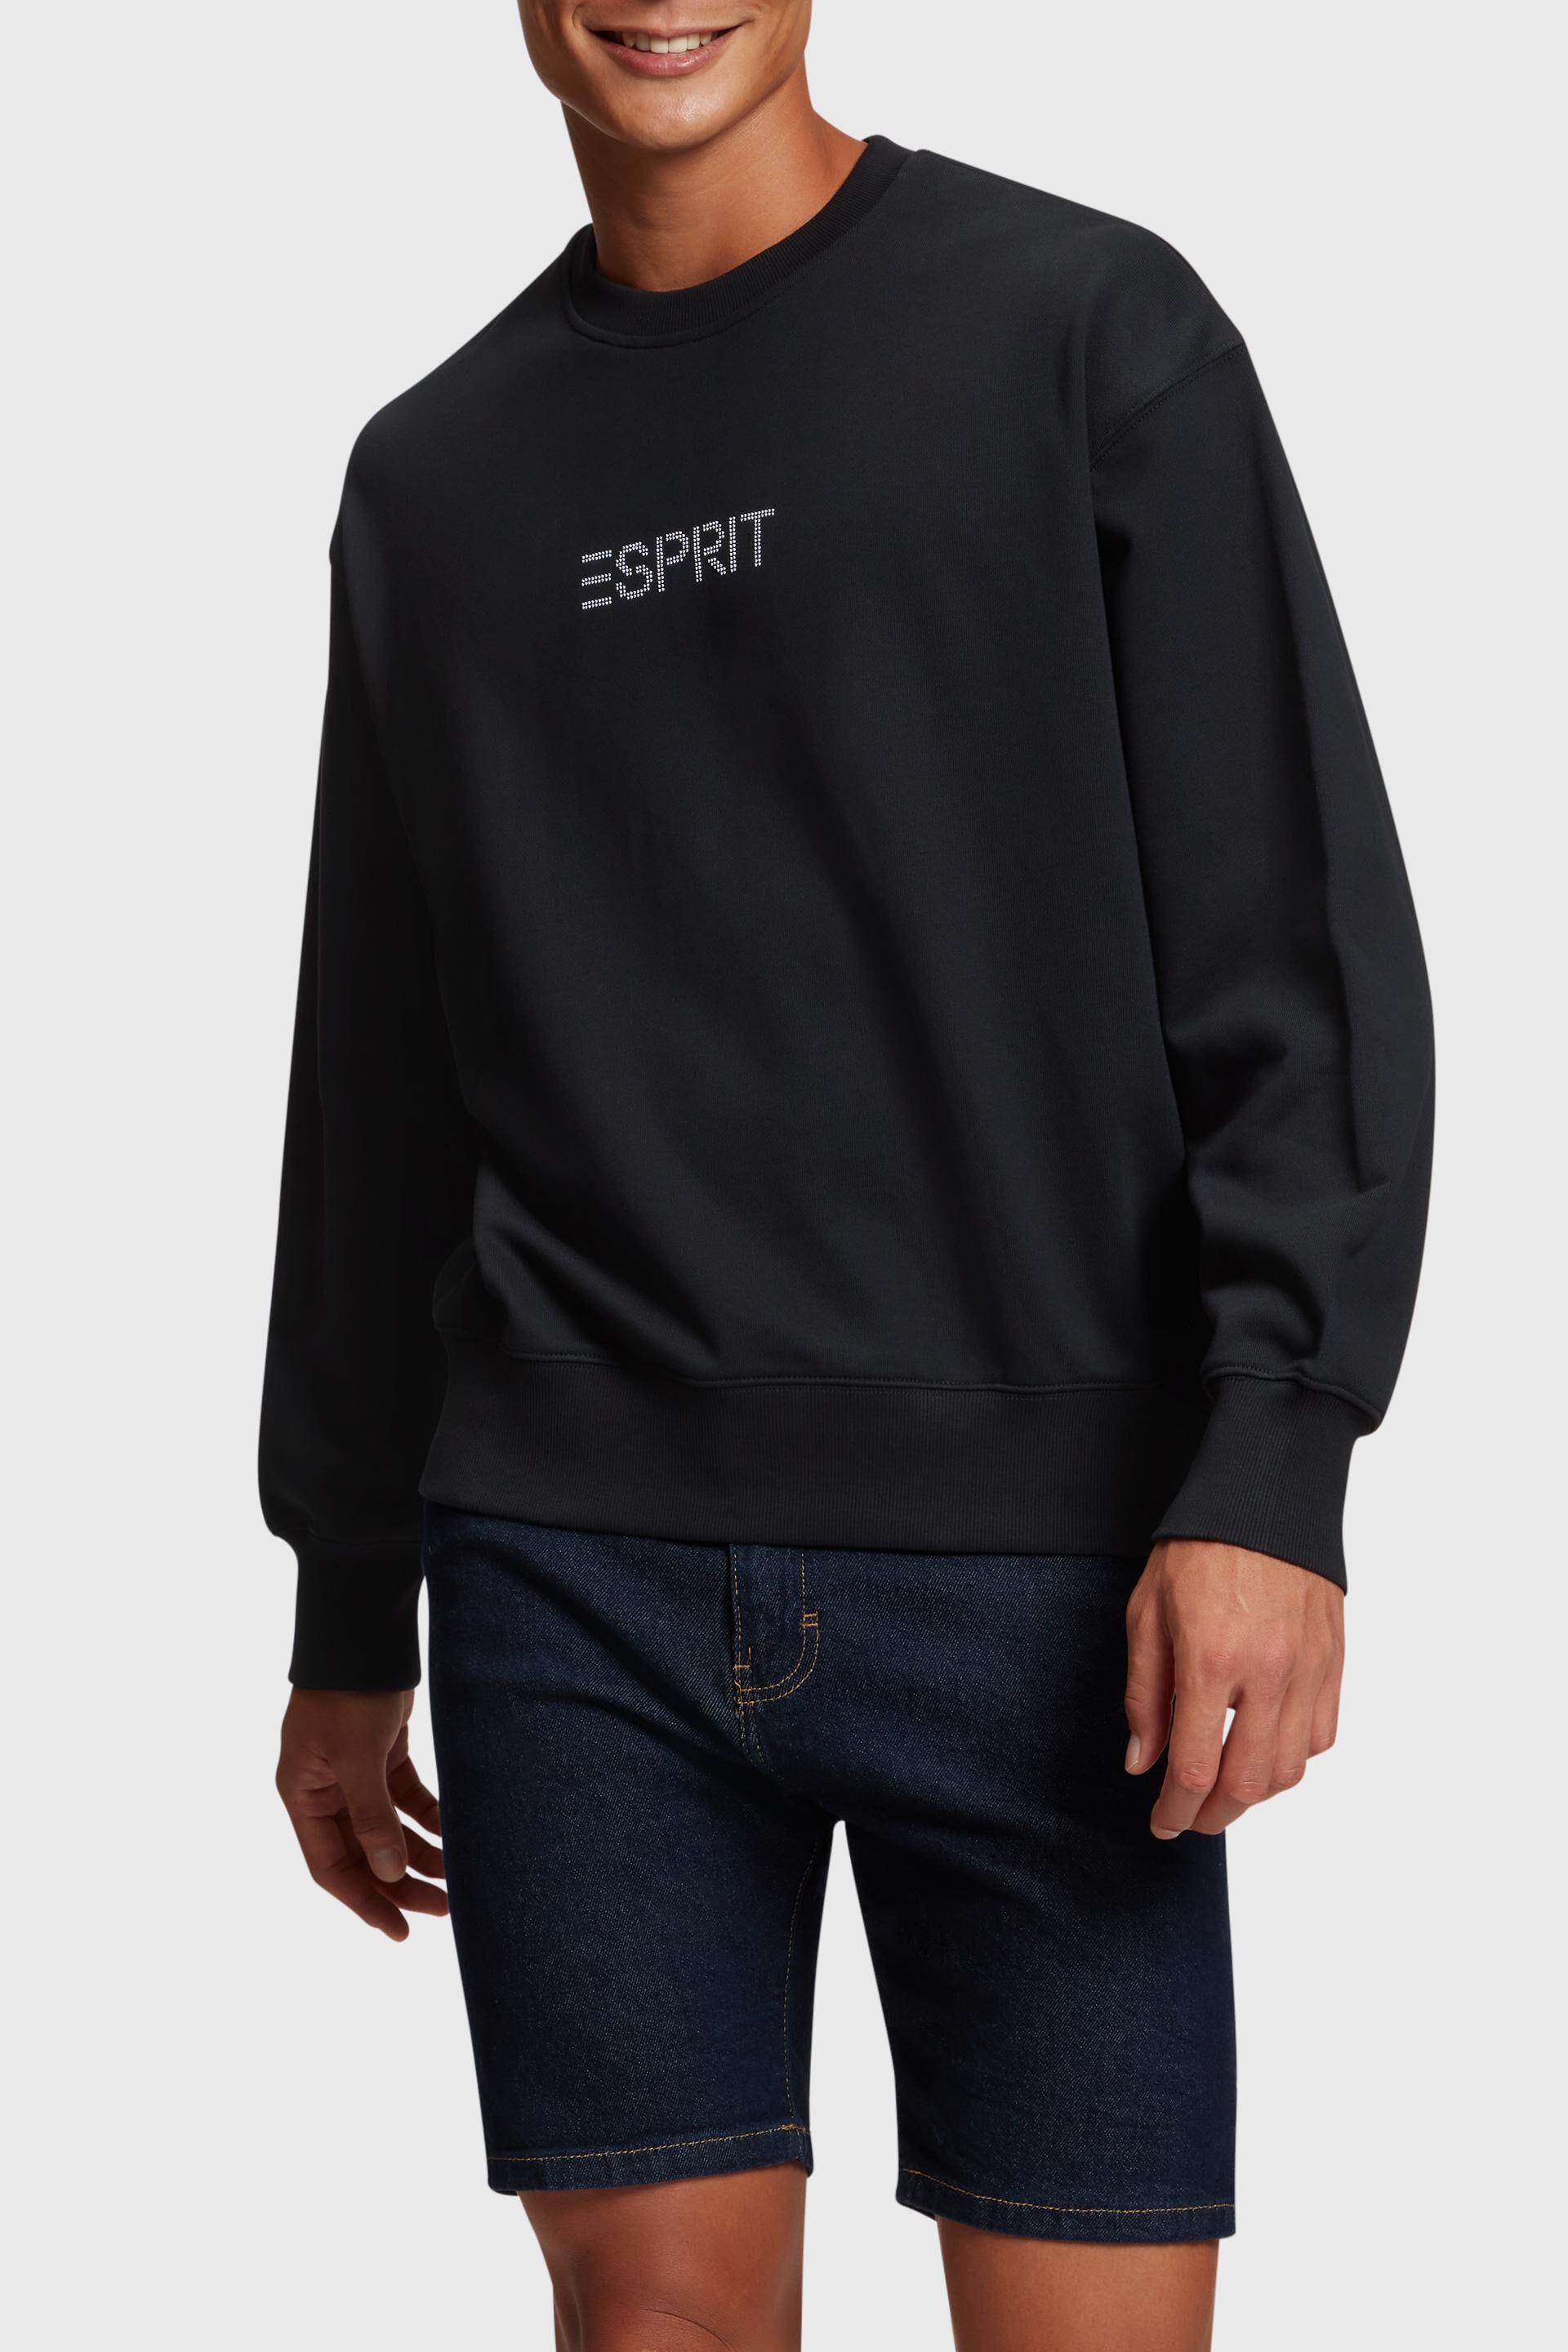 Esprit applique Stud sweatshirt logo